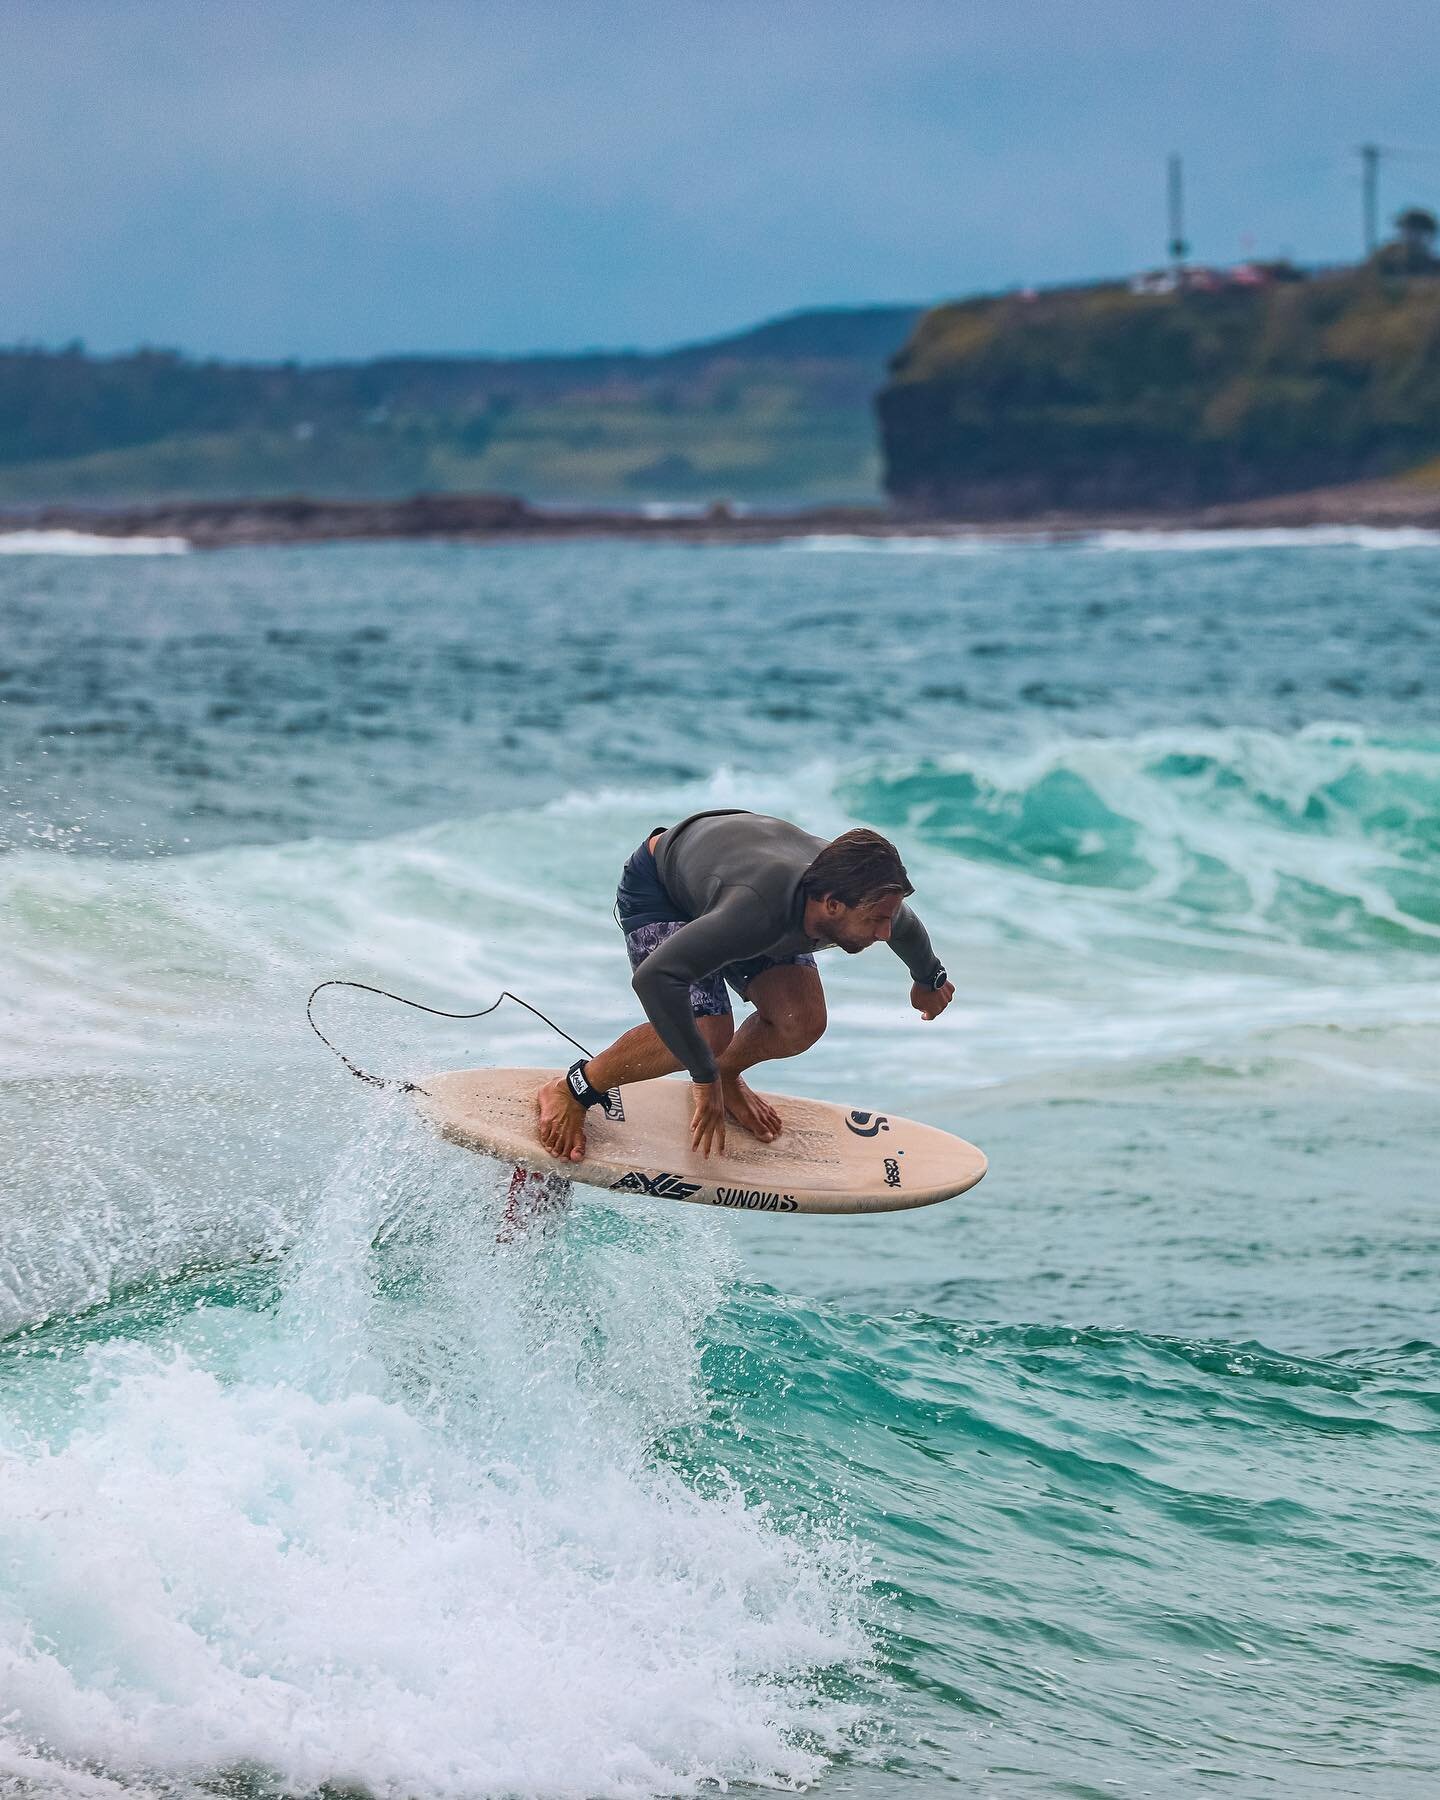 Casey Foil Camps 2022
.
.
.
.

#surfing #sydney #australia #supsurfing #videocontent #surfboards #videomarketing #canon #surfmedia #sunova #startboardsup #axisfoil #surfingnsw #surfingaustralia #surfingqld #fanaticsup #bodyboarding #foilsurf #efoil #